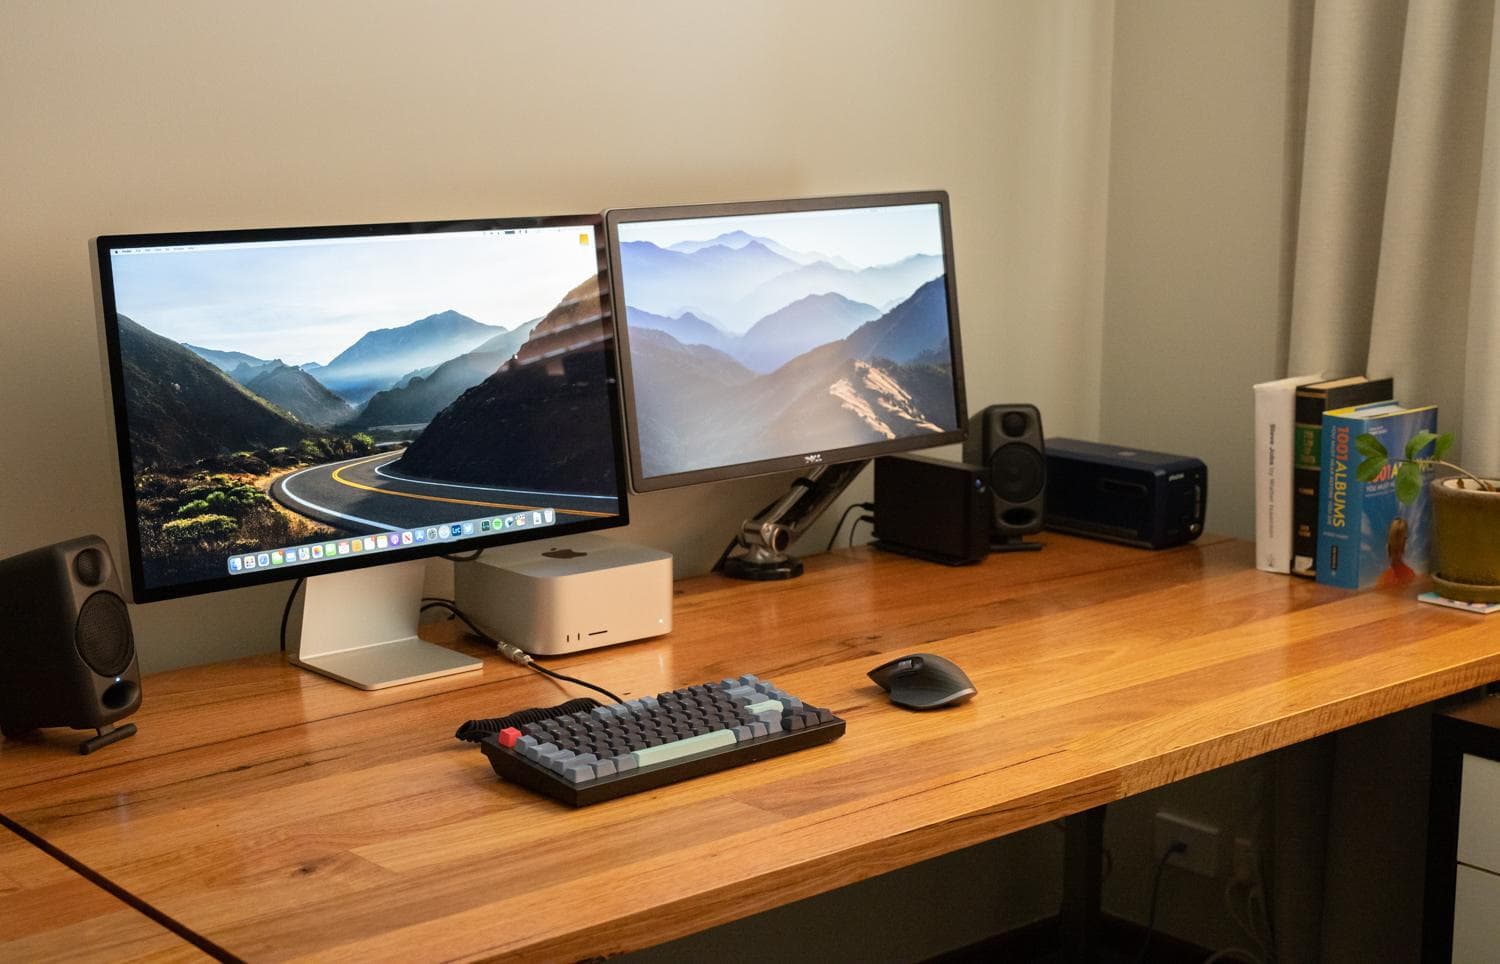 A new Mac Studio desktop and Studio Display anchor this setup.